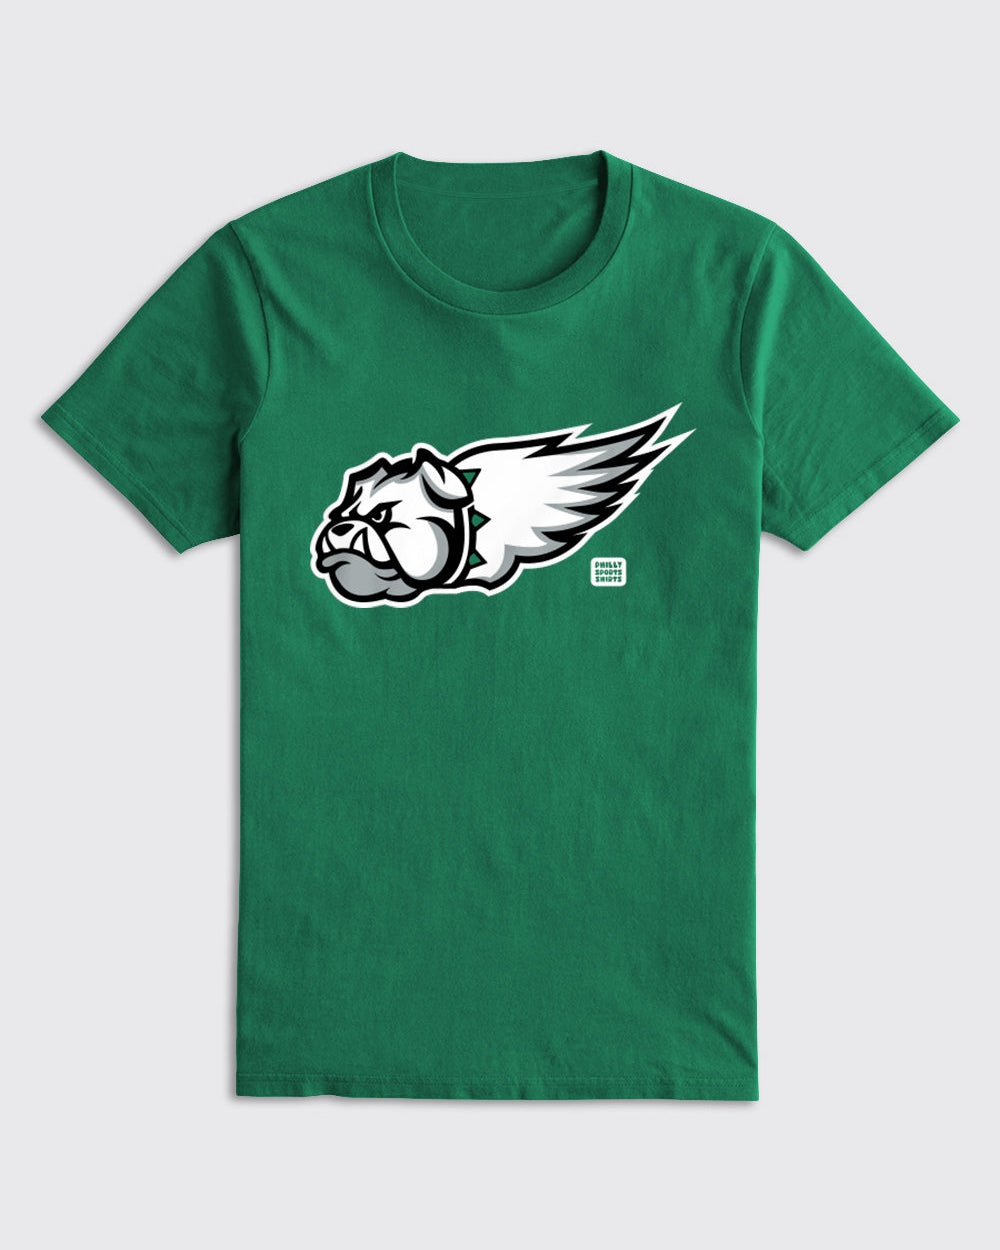 Philadelphia Eagles Merchandise, Eagles Apparel, Gear